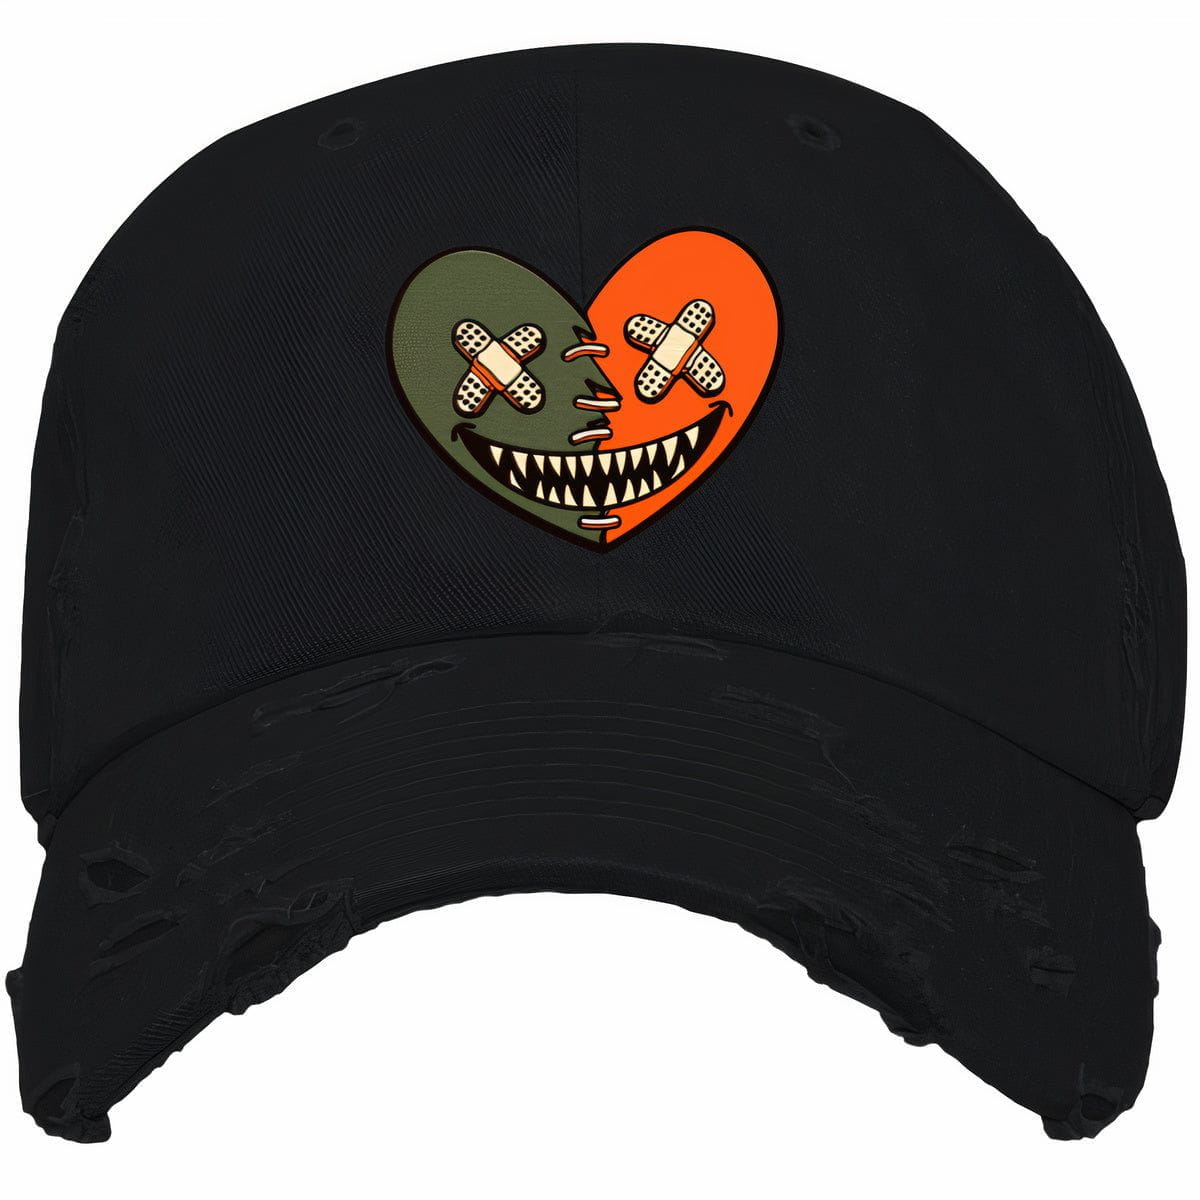 Celadon 1s Hats - Jordan Retro 1 Celadon 1s Hats - Heart Baws